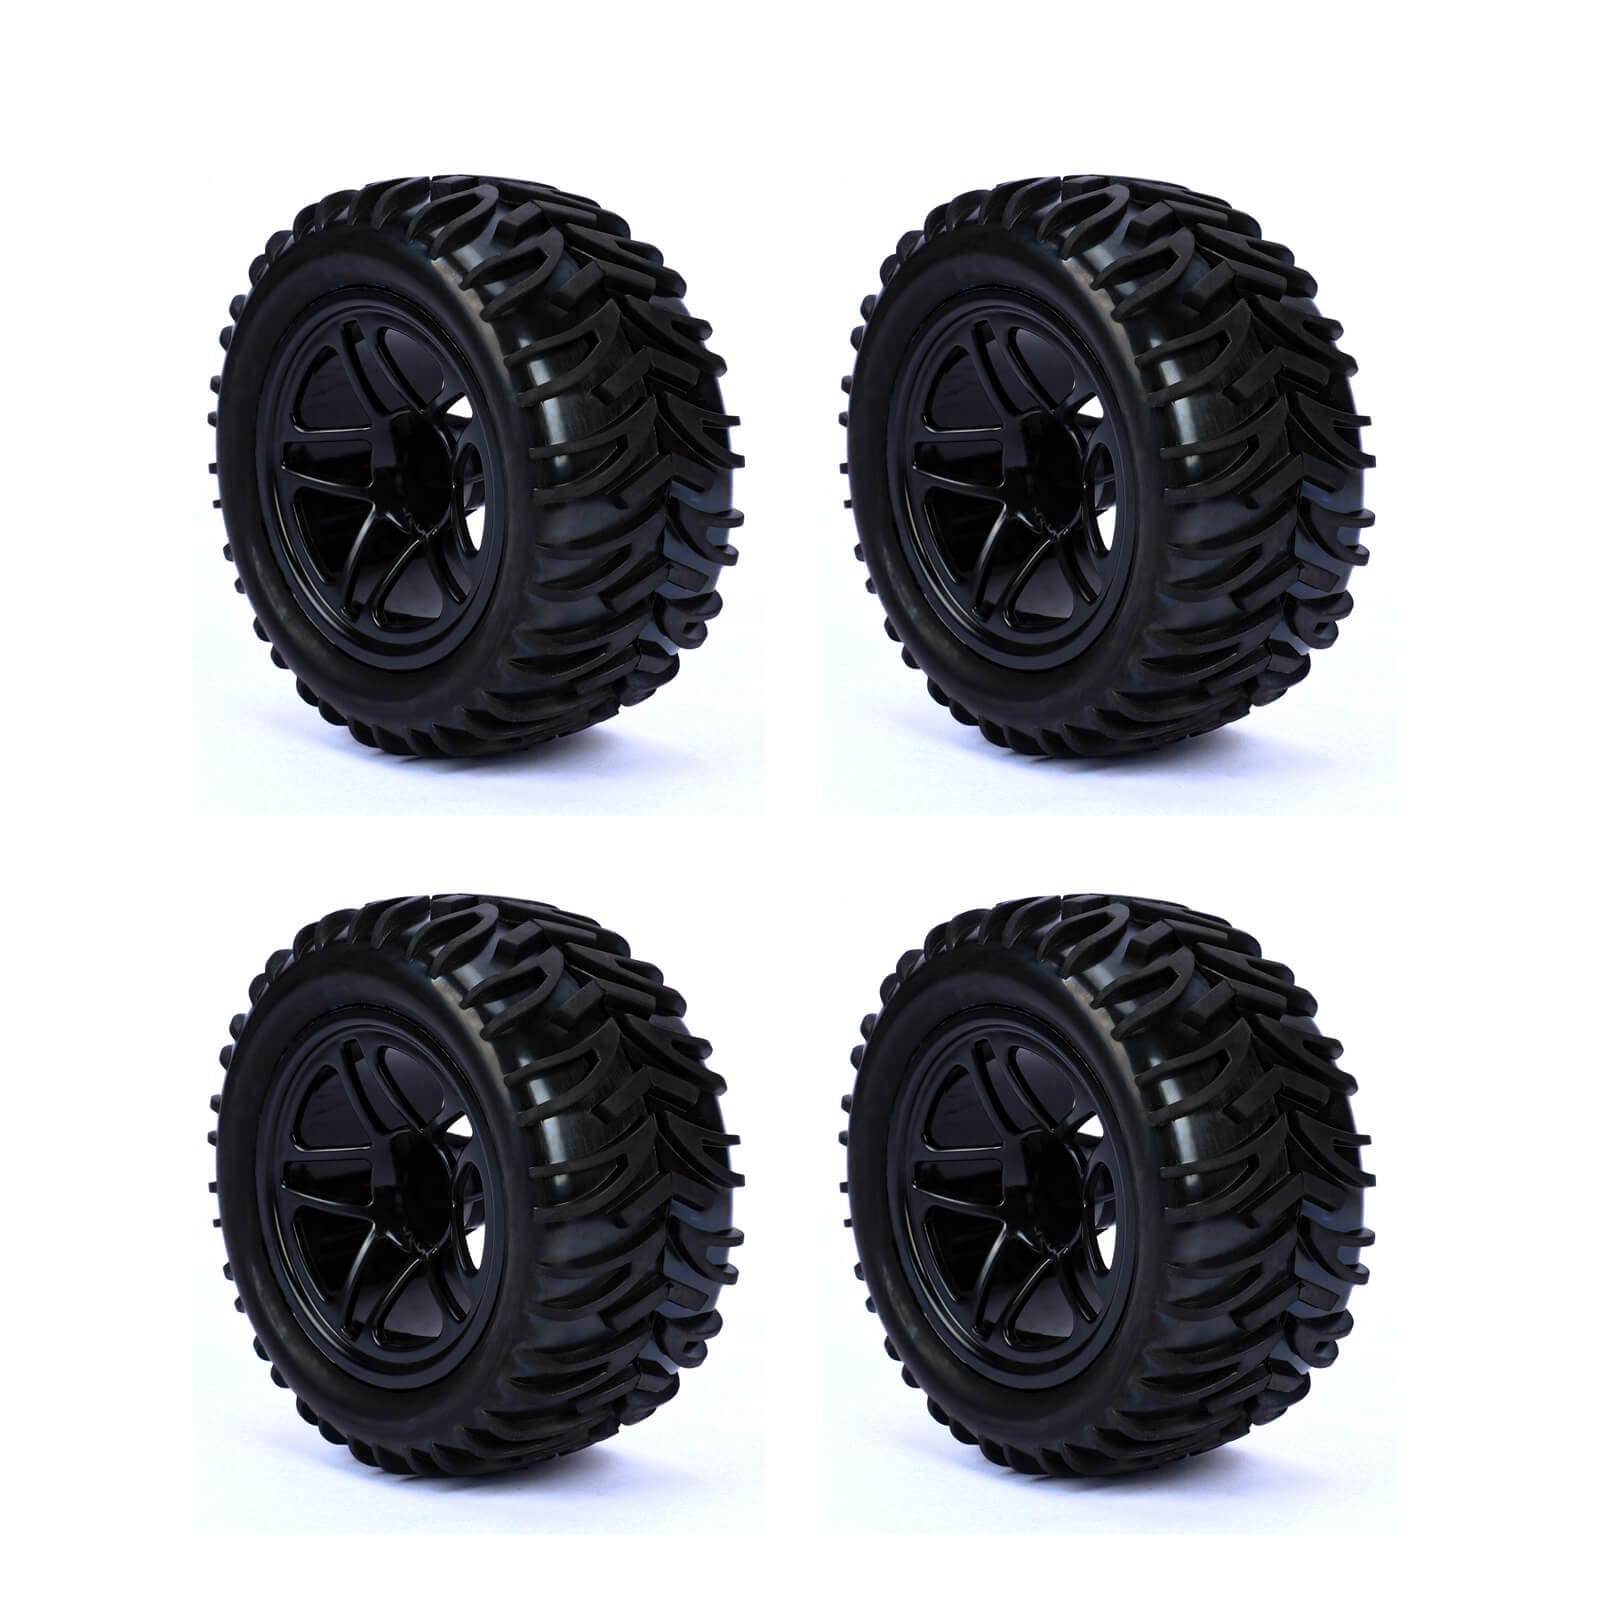 RCAWD Amazon RC Wheel & Tires 1/10 Pre-glued Monster Truck Wheel Tires LG-015BL LG-016BL